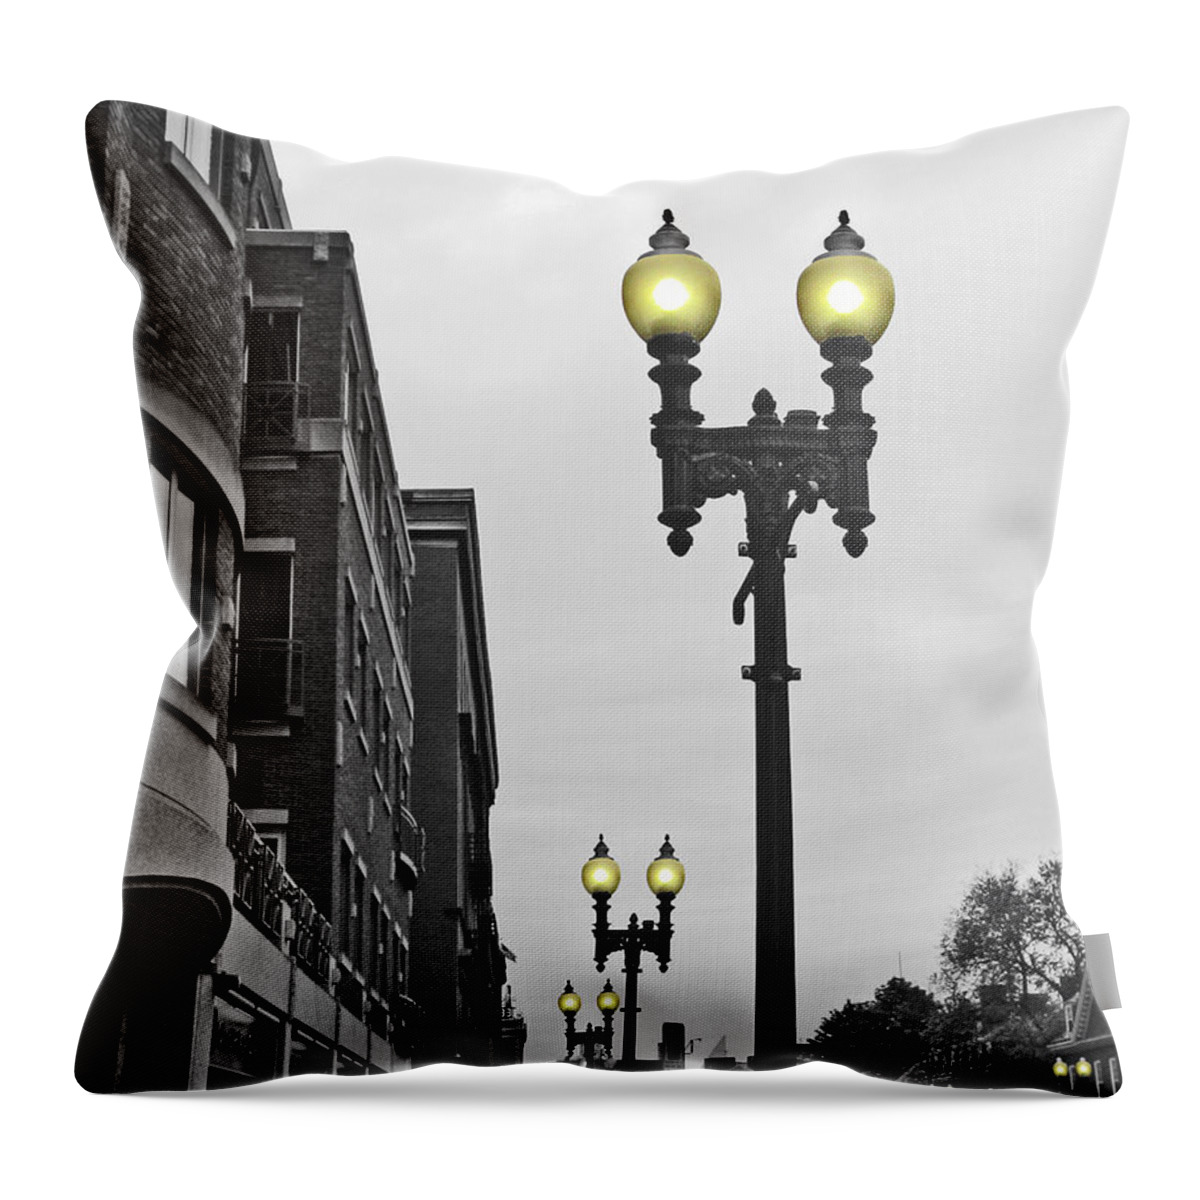 Boston Throw Pillow featuring the photograph Boston Streetlamps by Cheryl Del Toro